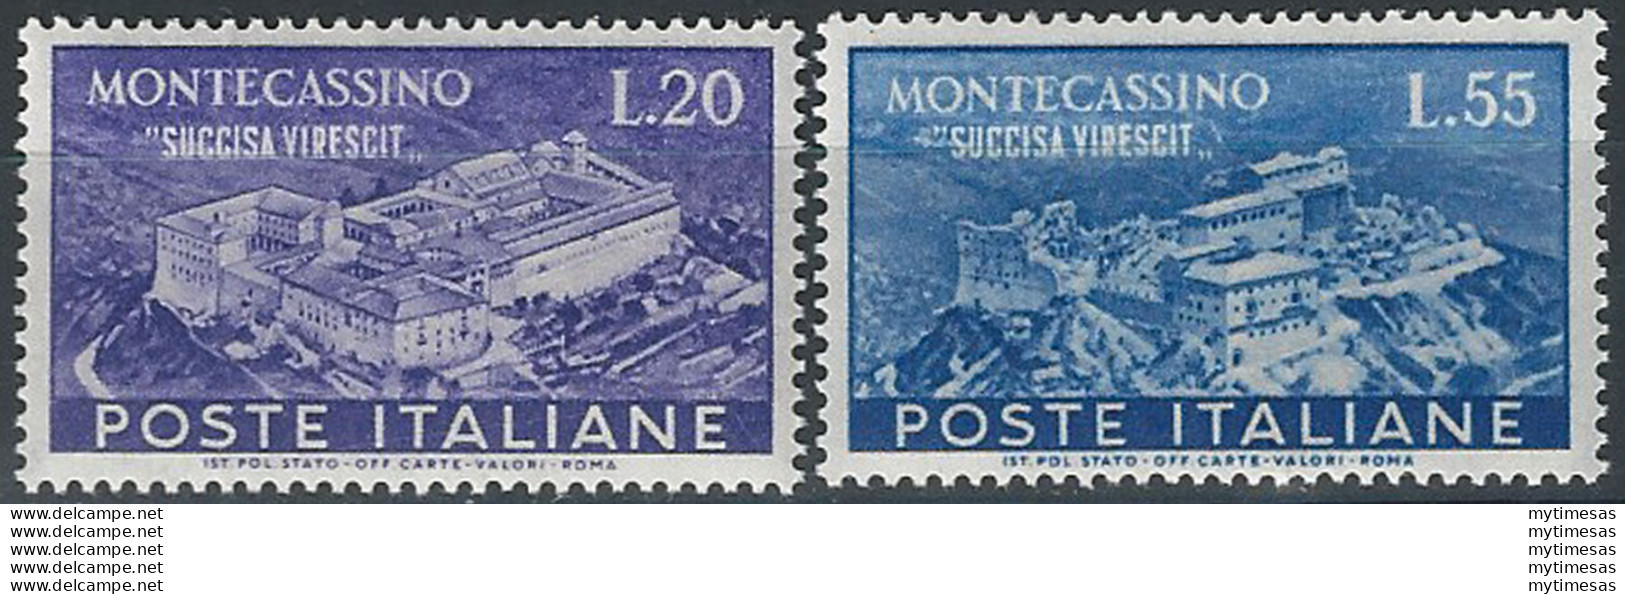 1951 Italia Abbazia Di Montecassino MNH Sass. N. 664/65 - 1946-60: Mint/hinged